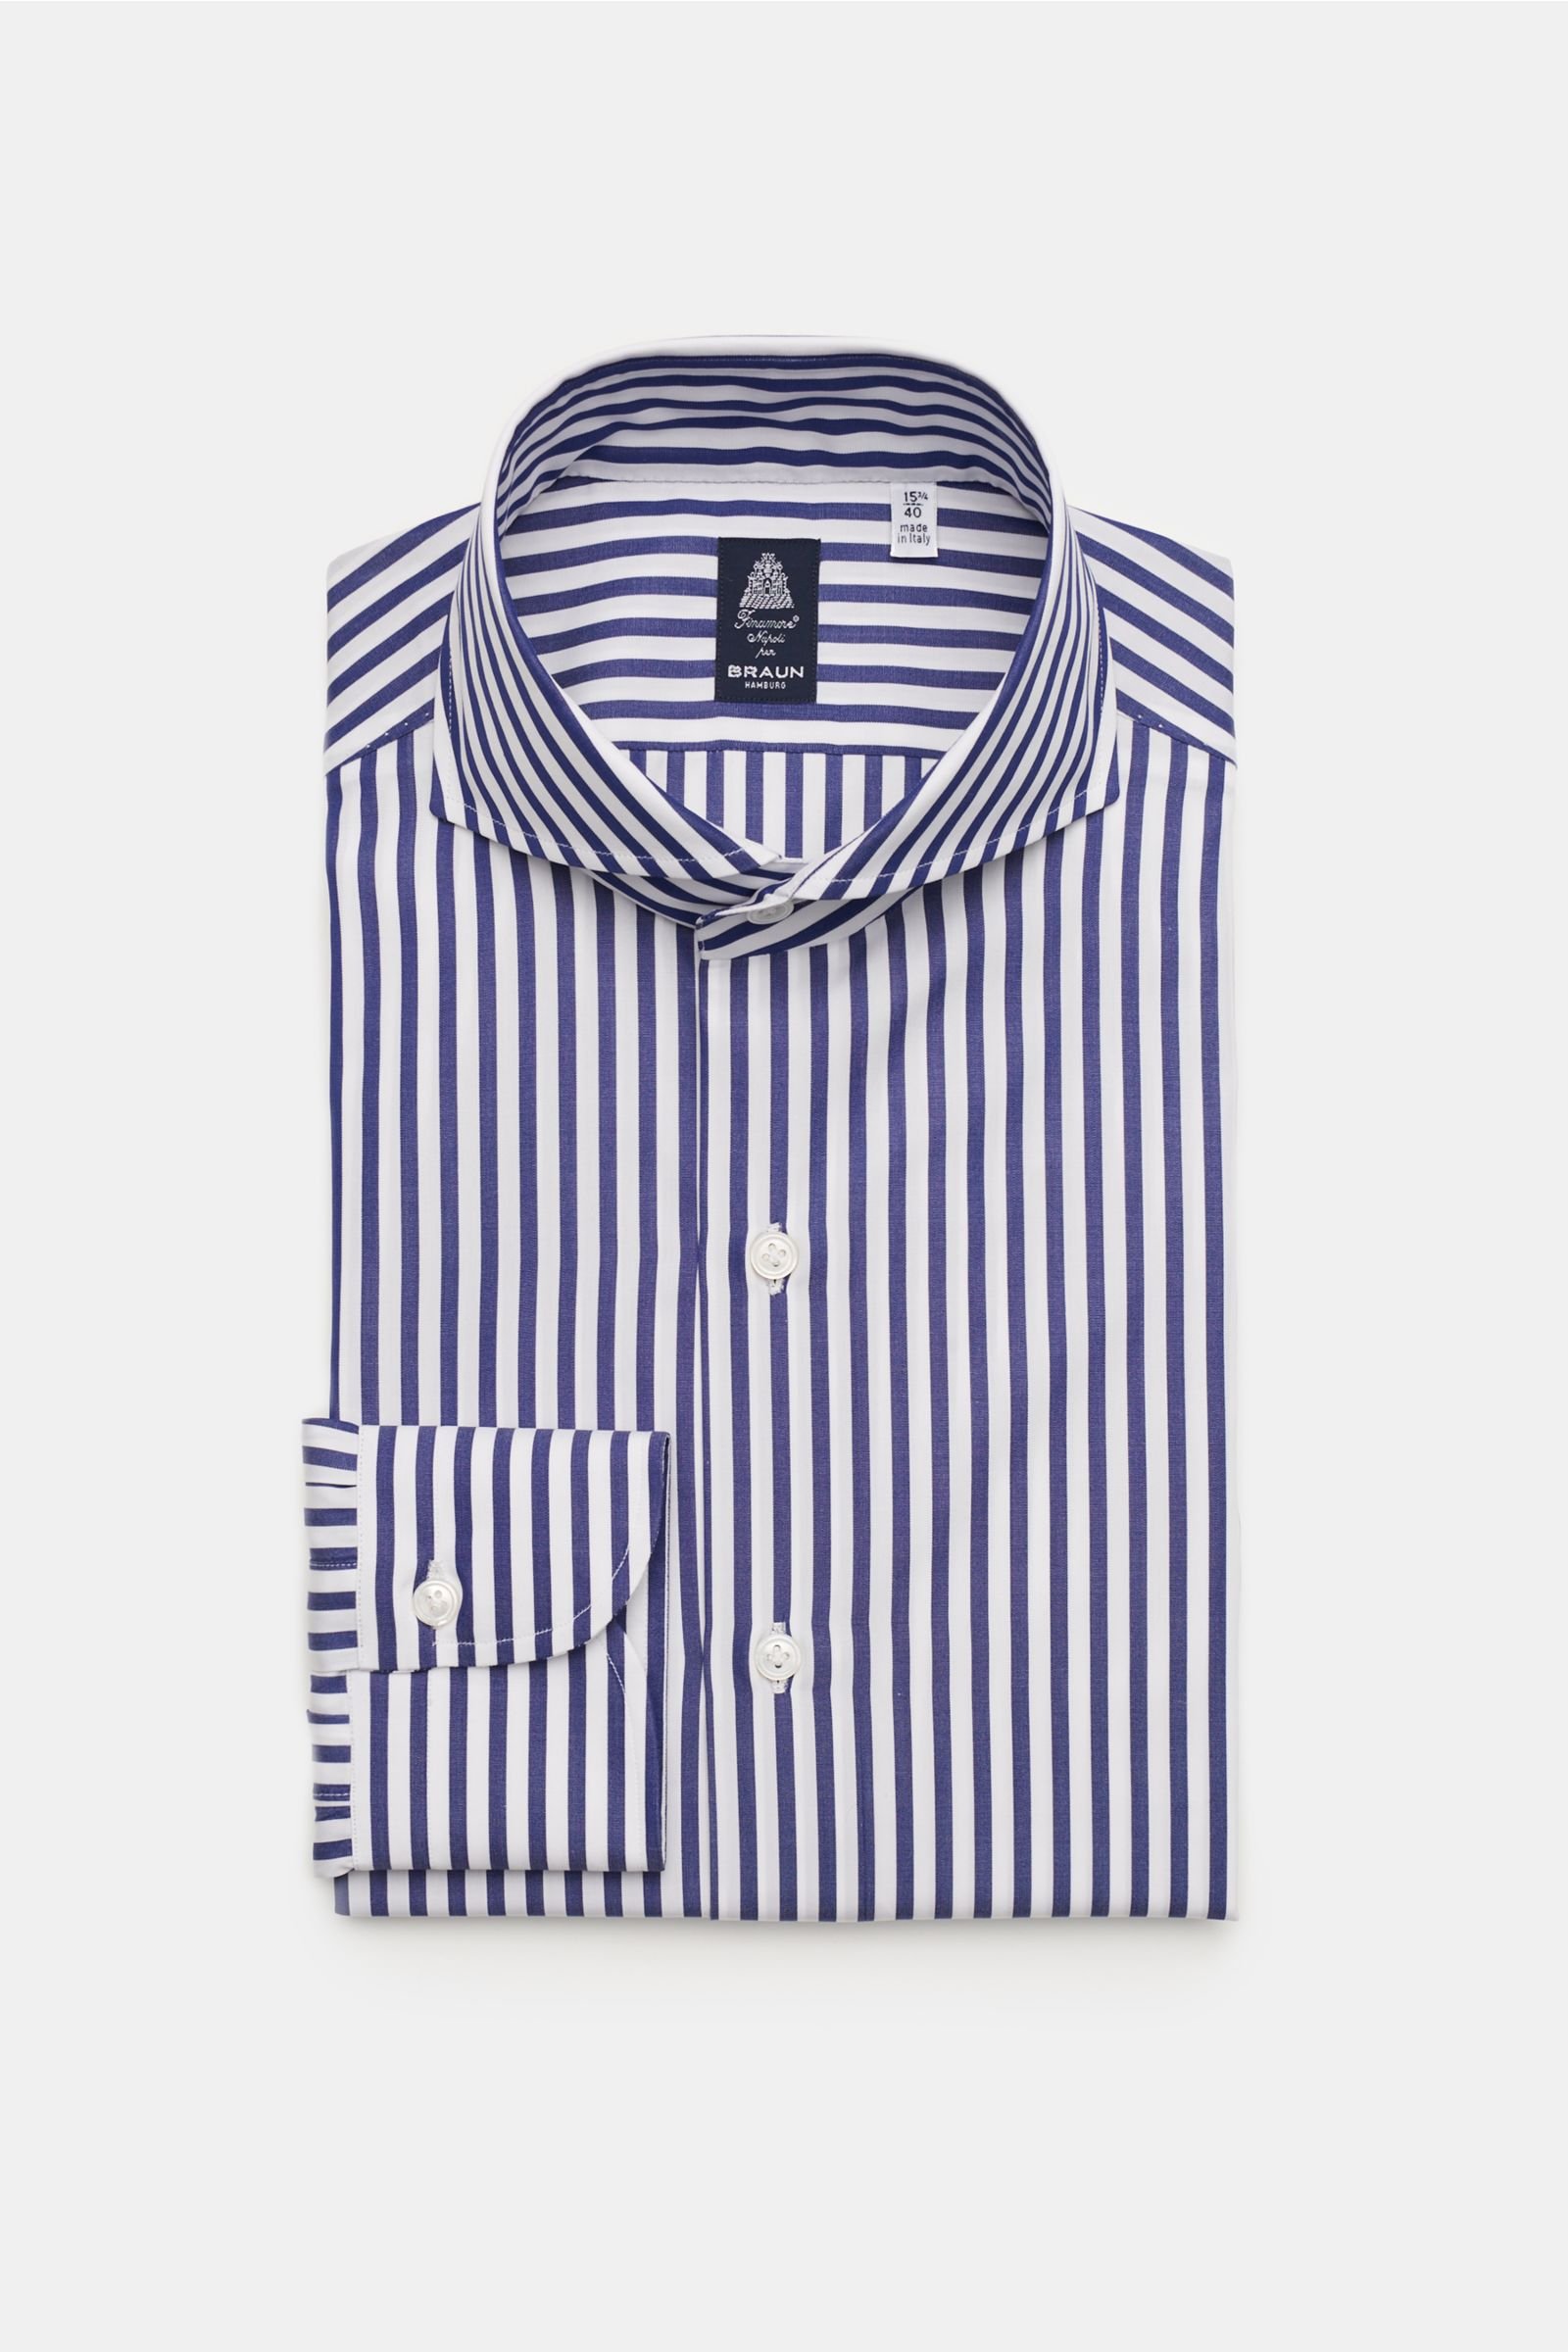 Business shirt 'Sergio Napoli' shark collar navy/white striped